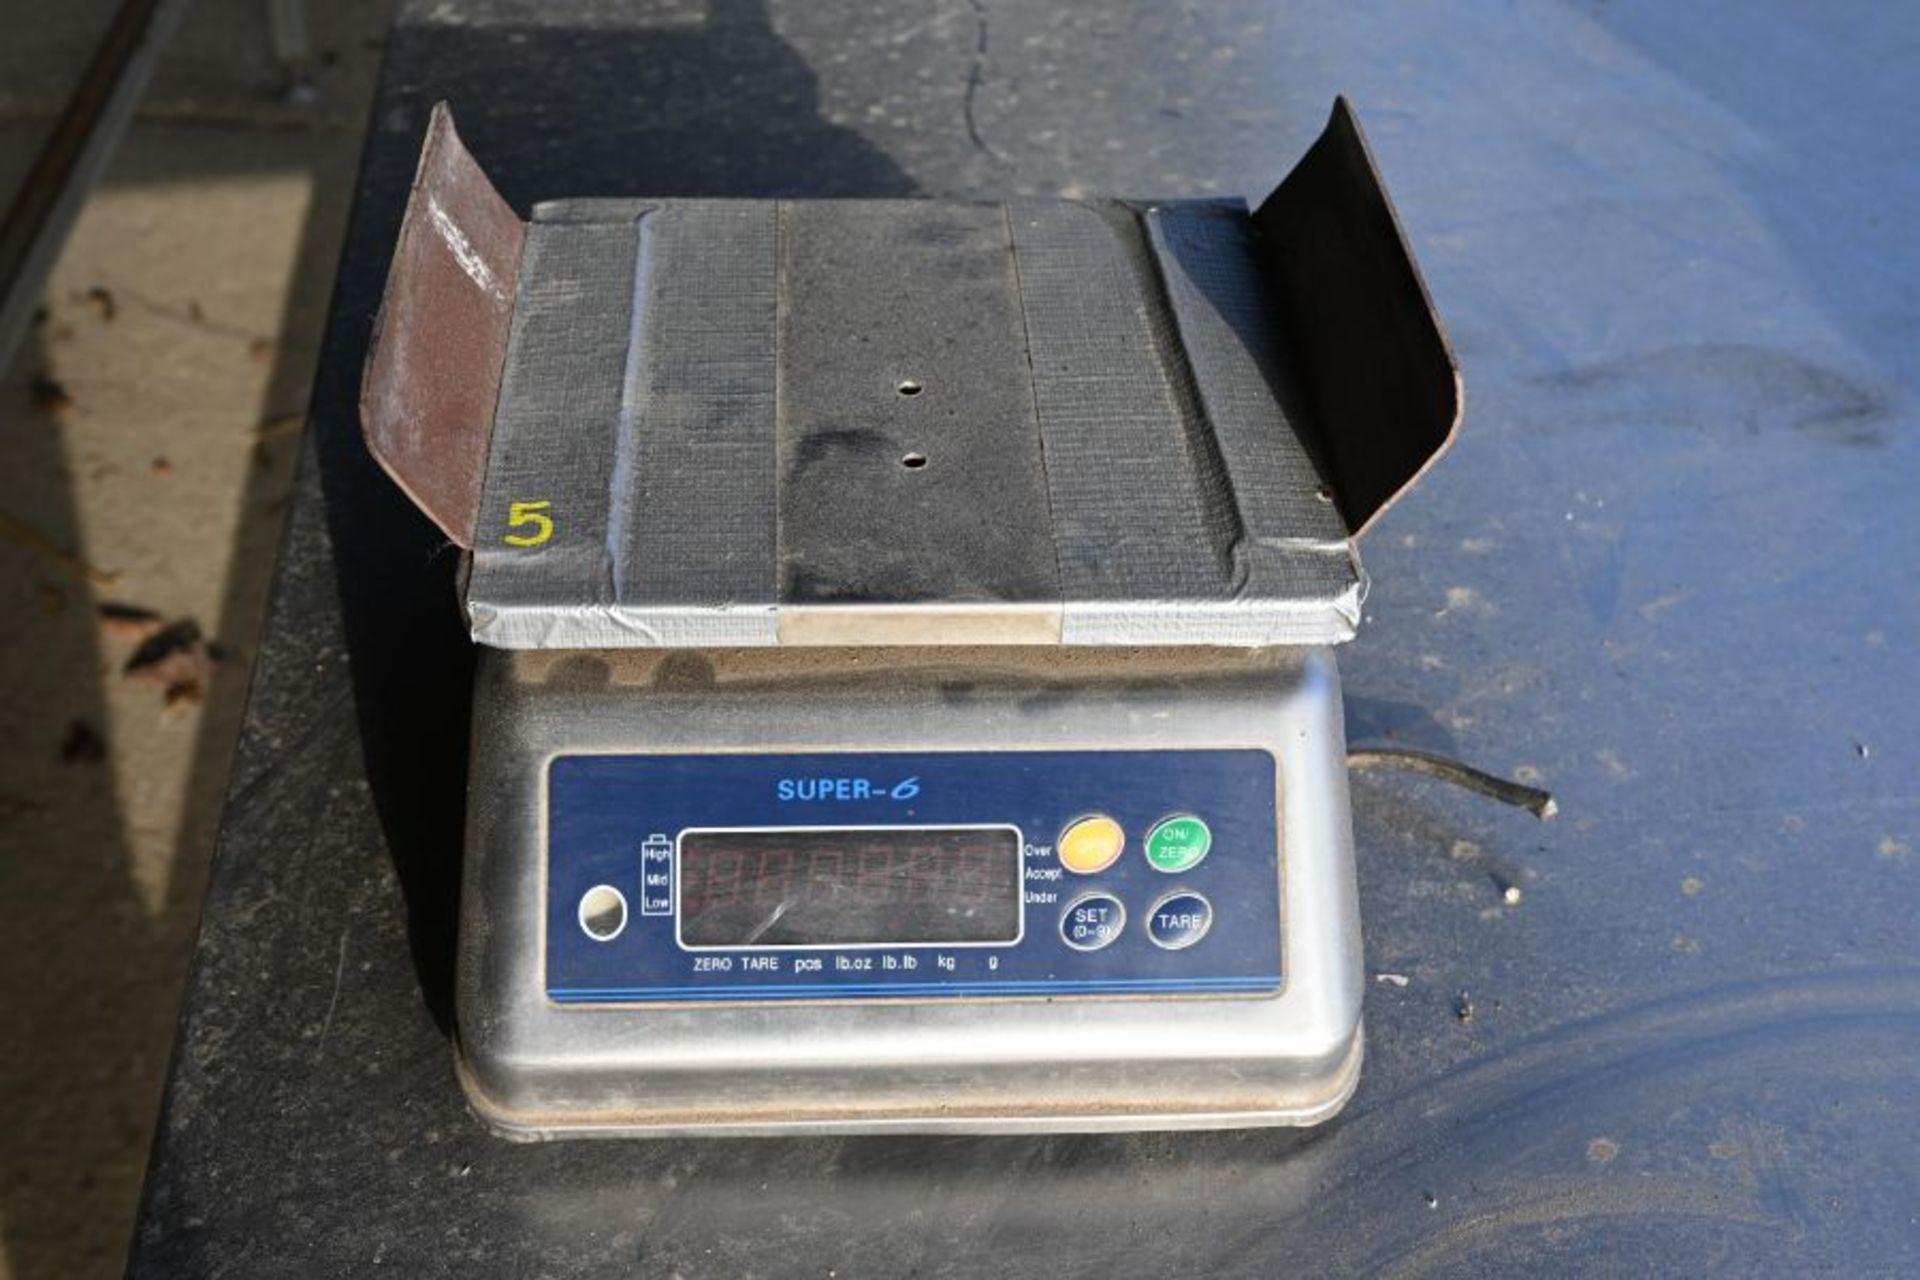 Super 6 Yantai Junjie weighing apparatus - Image 3 of 4